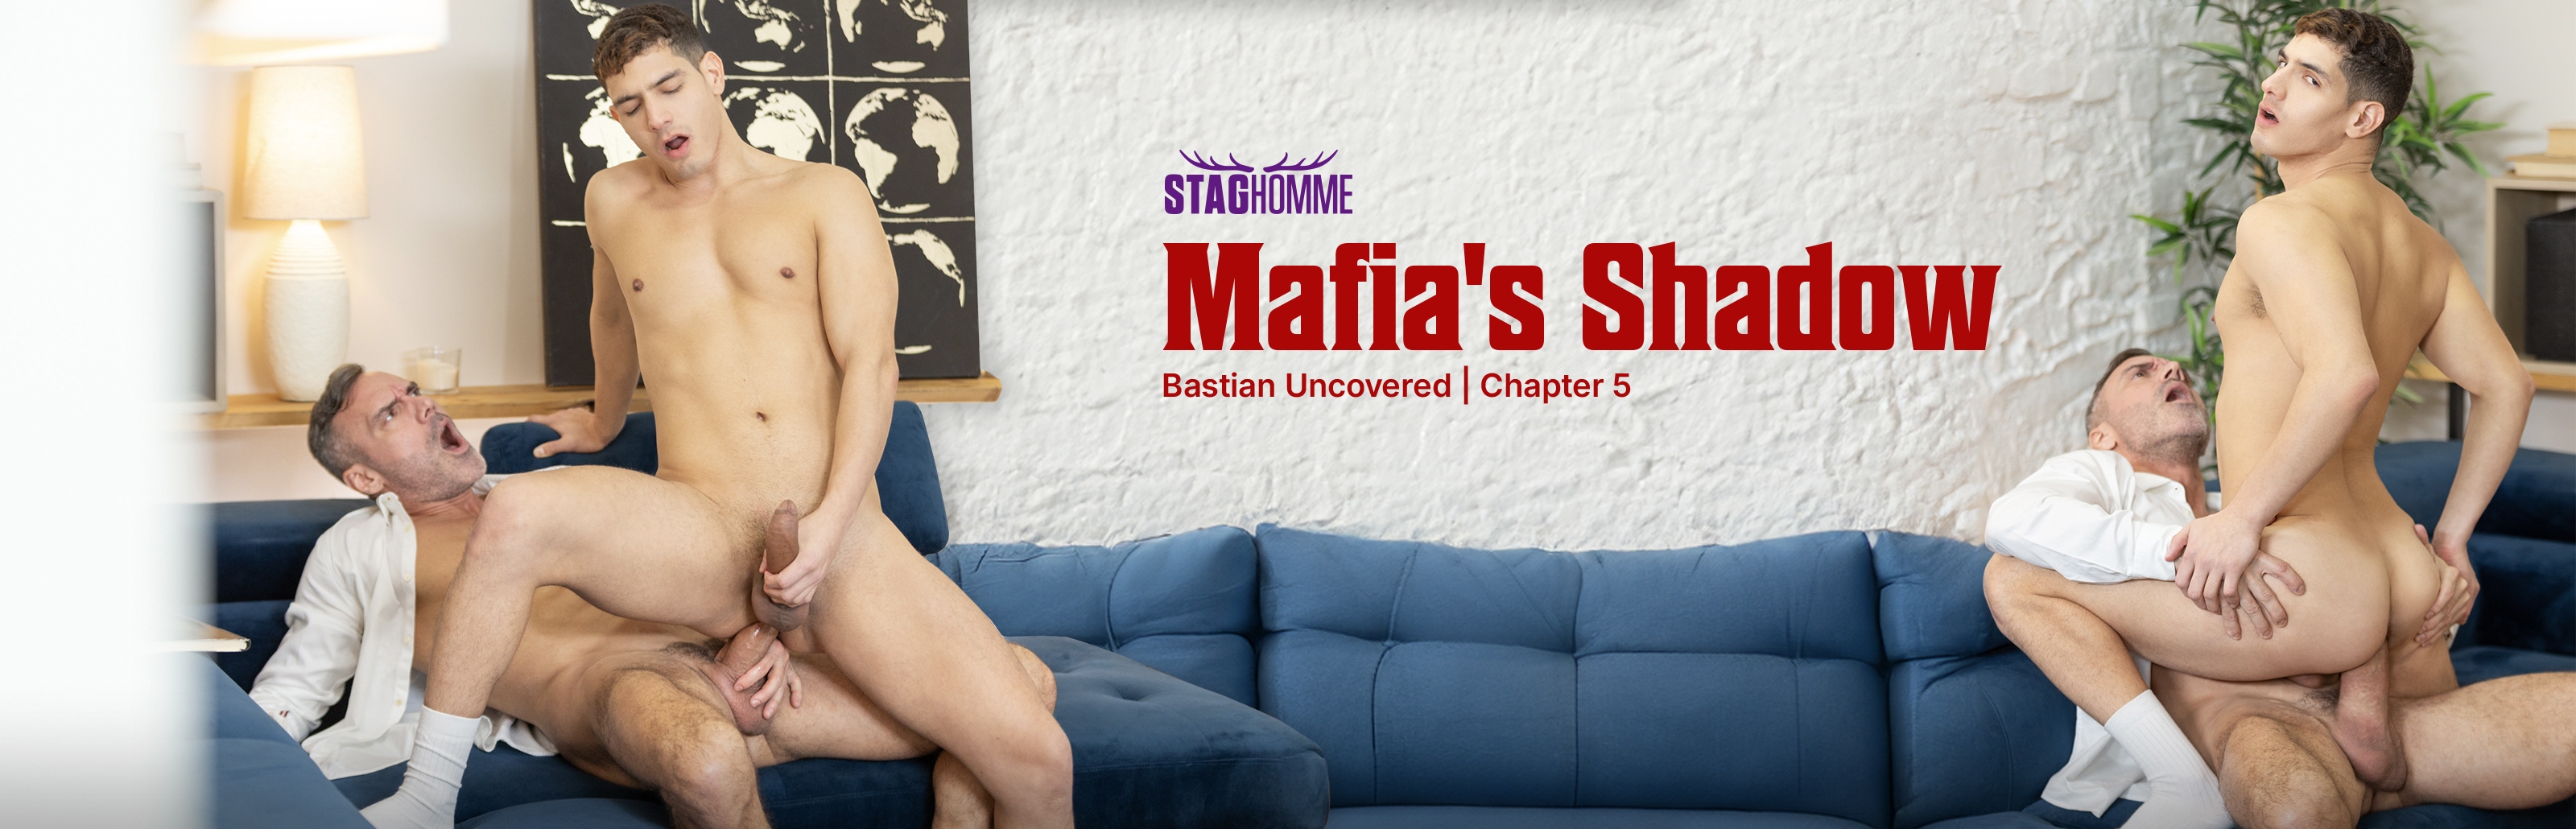 Mafia's Shadow | THE MAFIA | Chapter 5 Photos 97